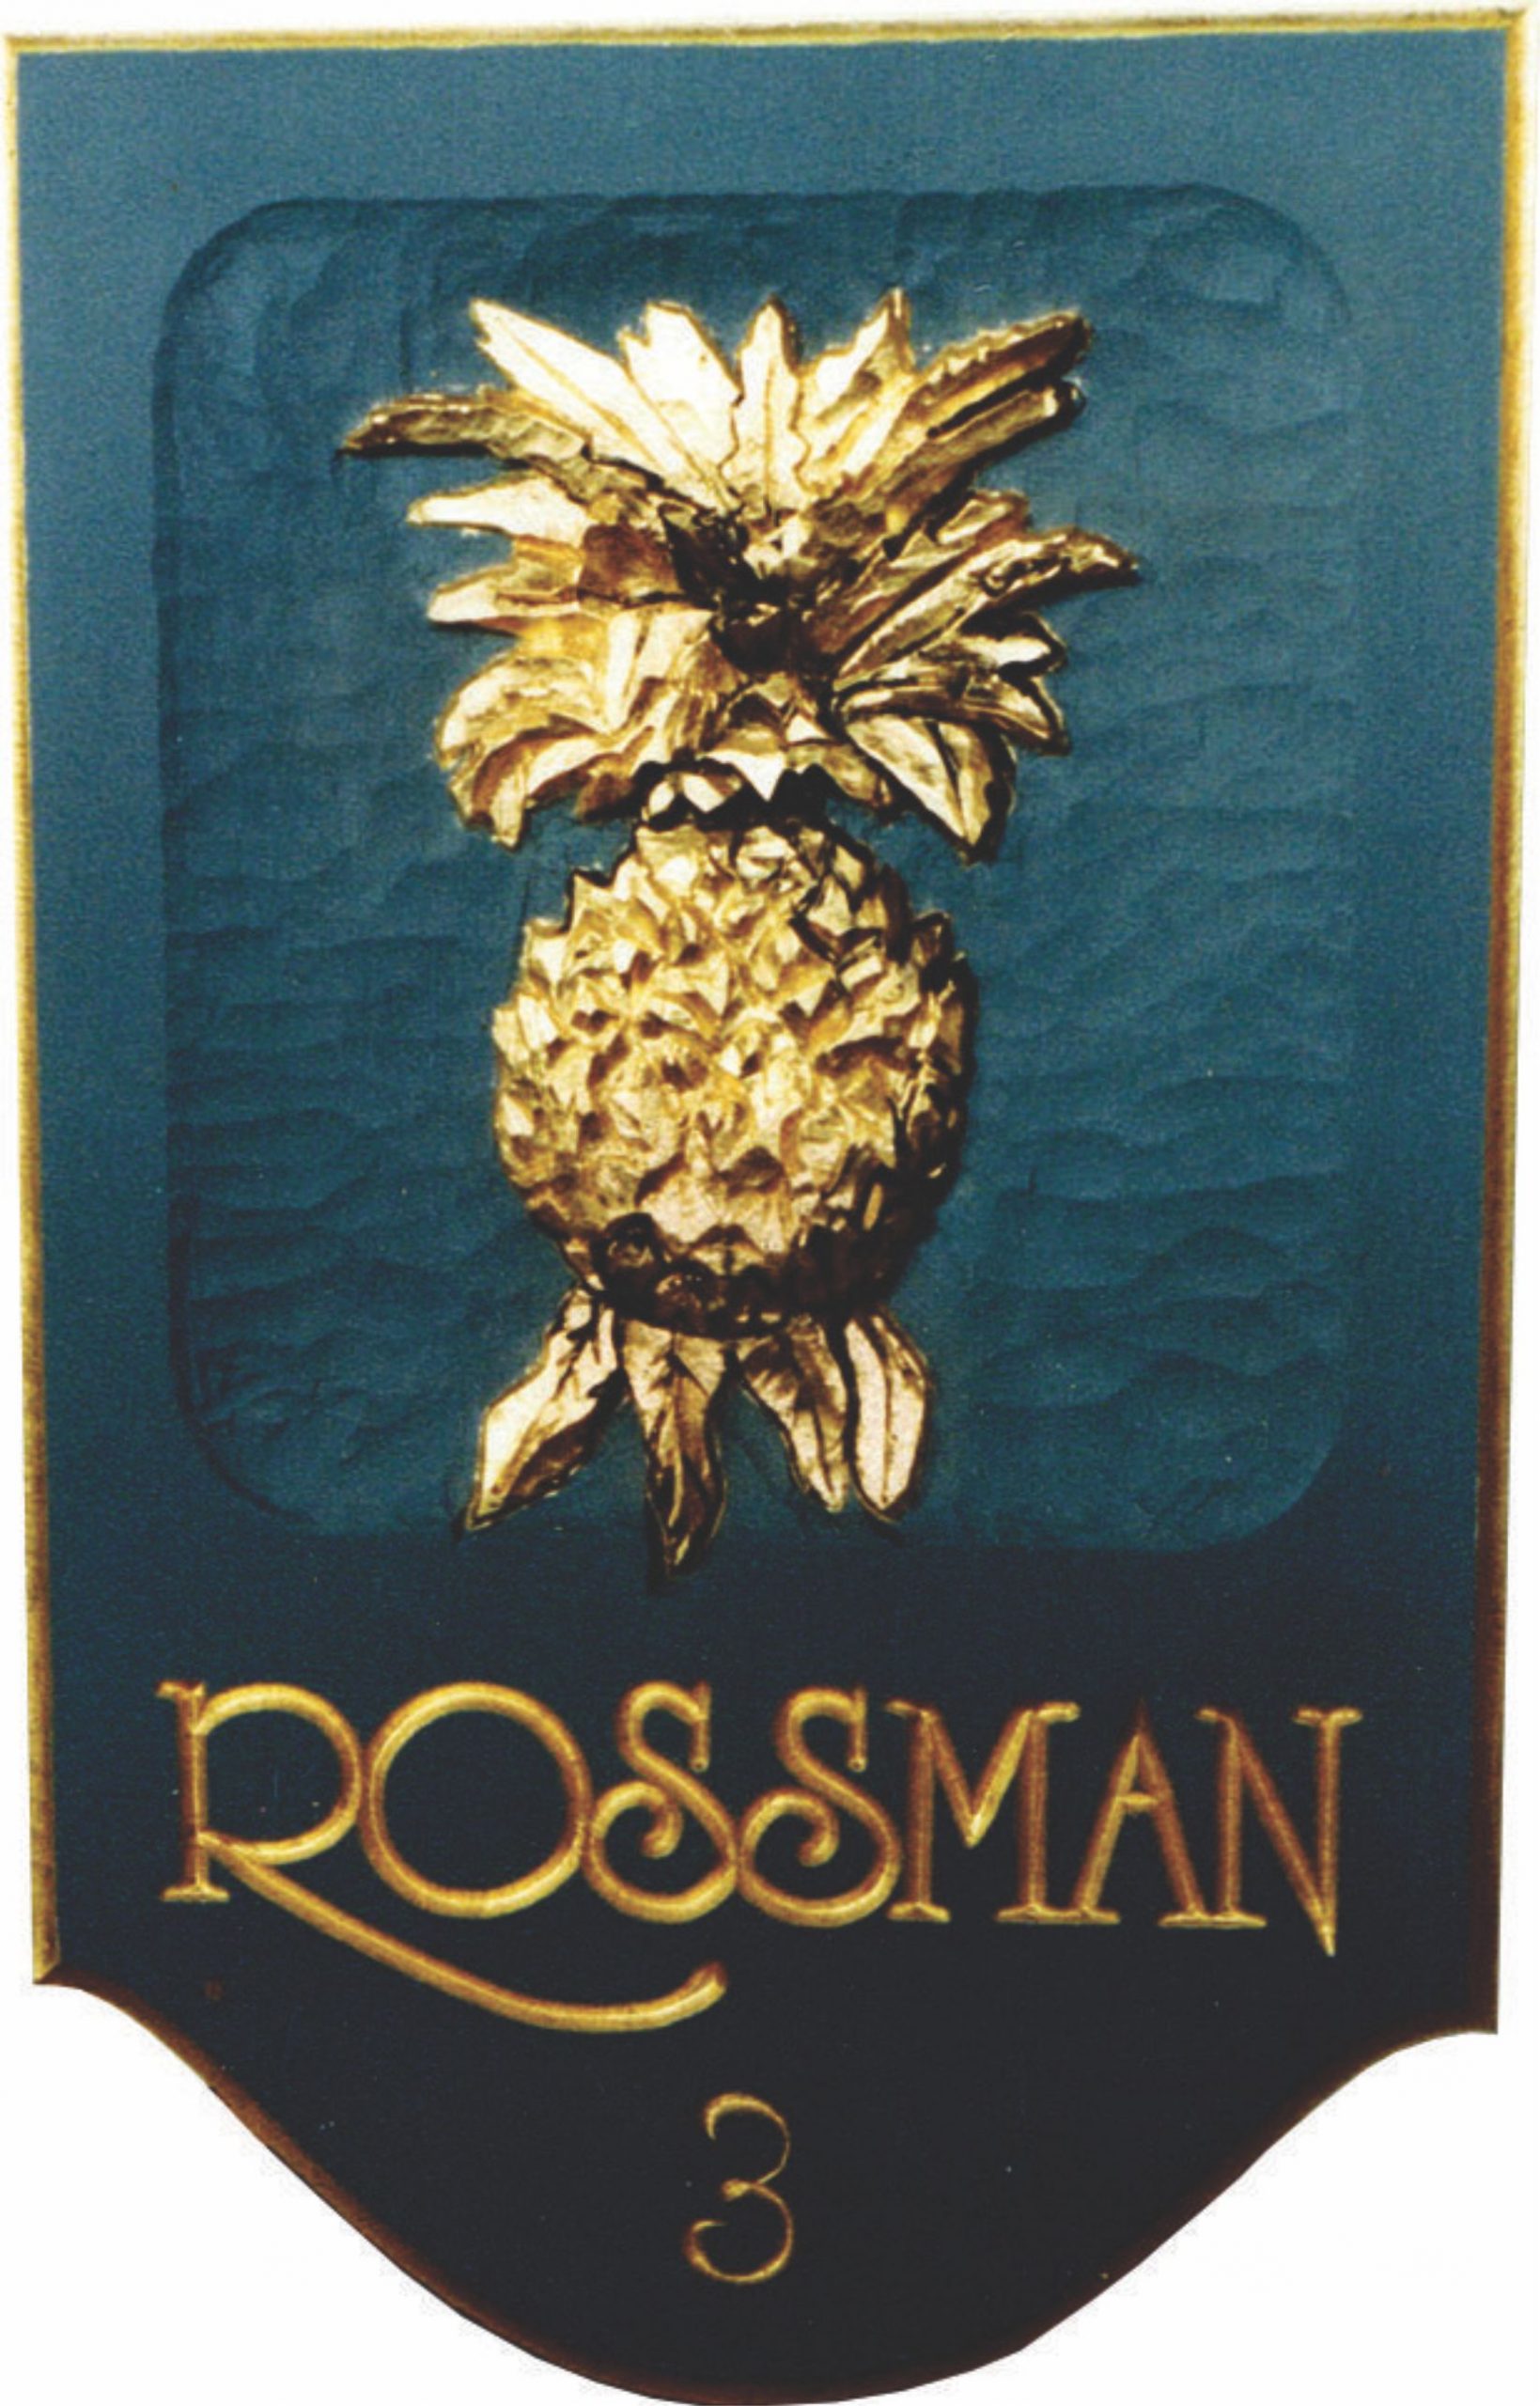 Rossman-3-scaled